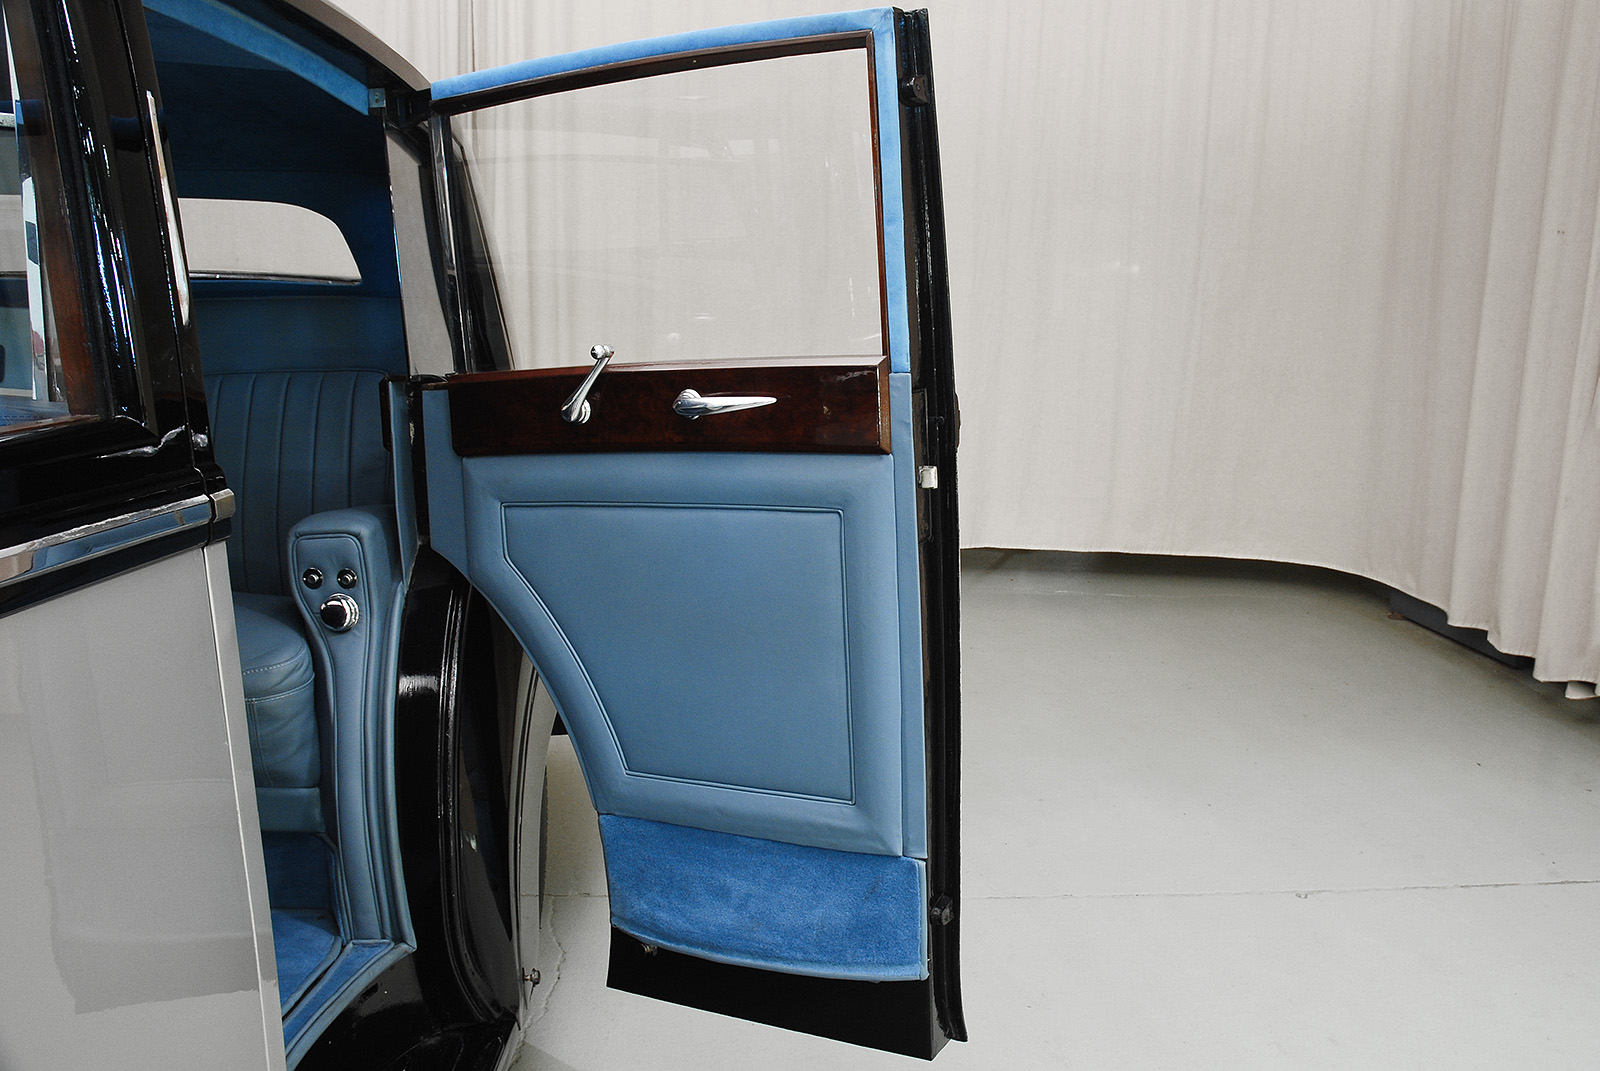 1952 rolls-royce silver wraith coachbuilt